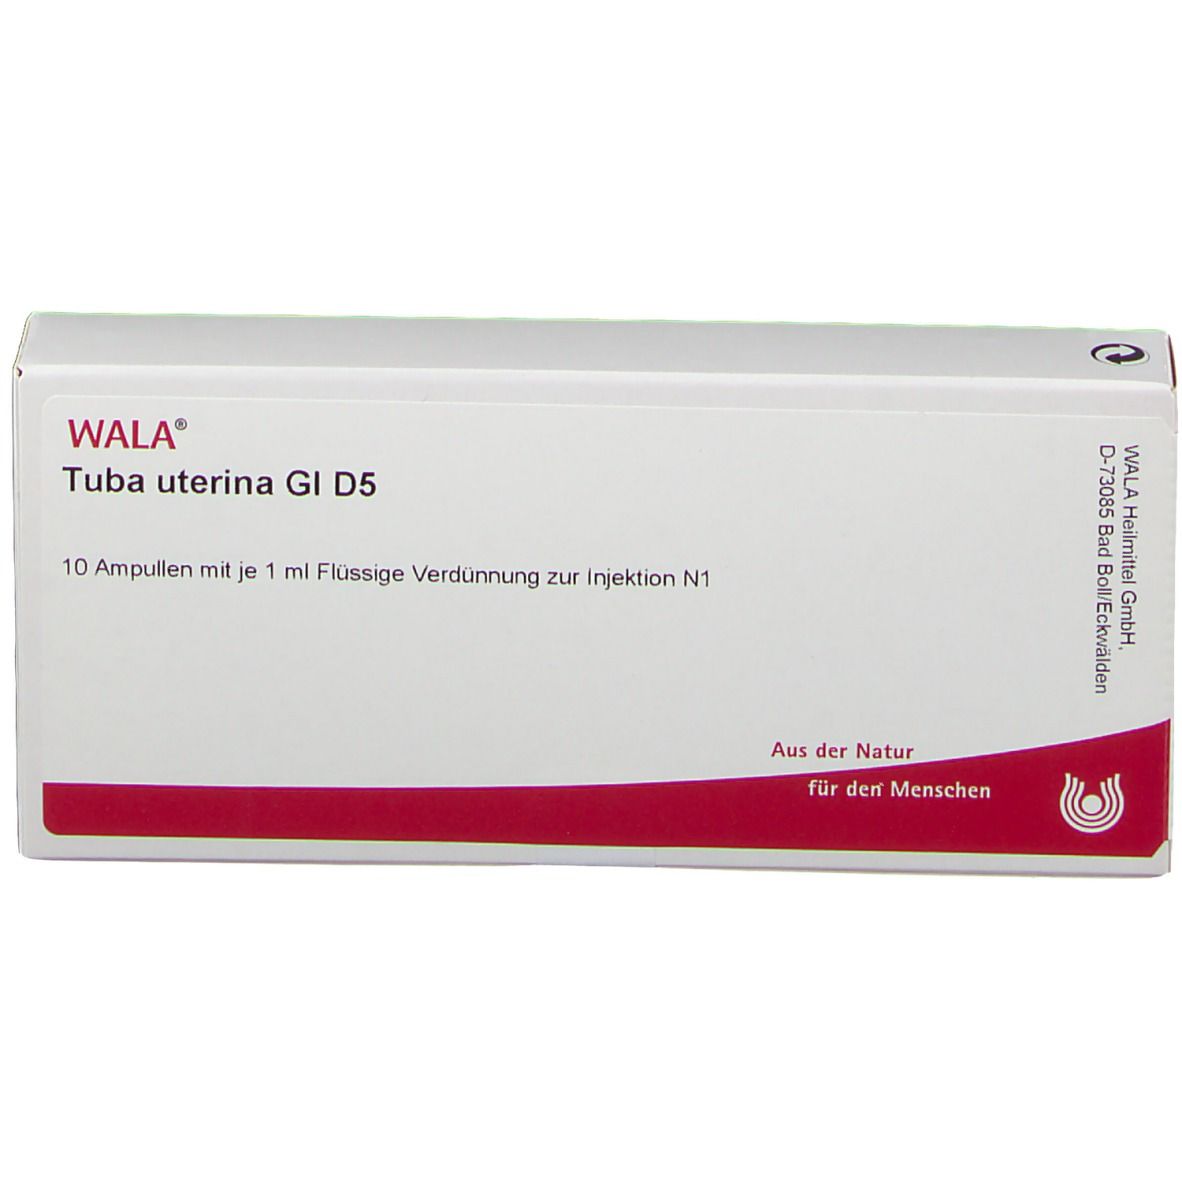 WALA® Tuba uterina Gl D 5